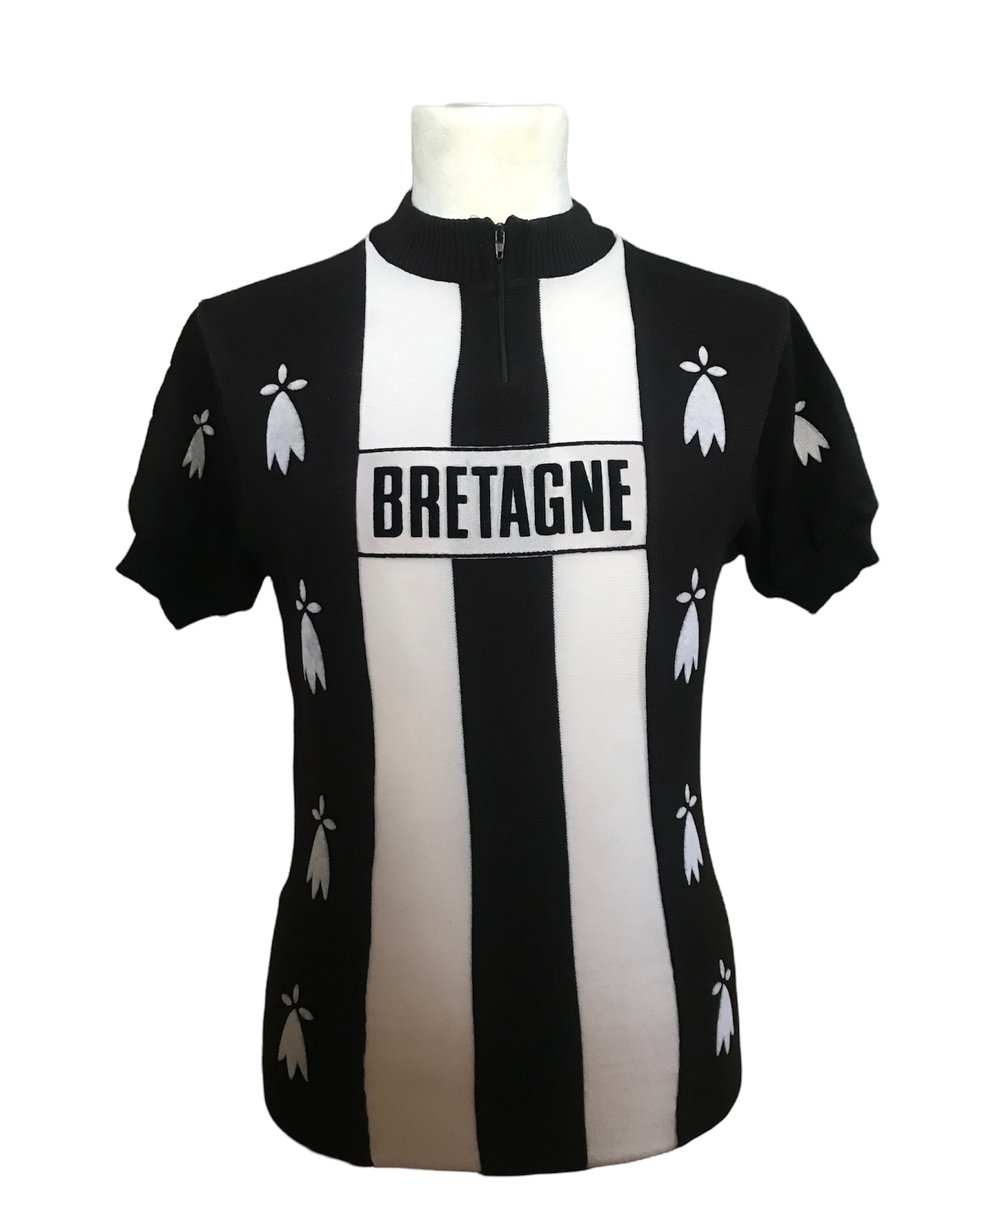 1988 ðŸ‡«ðŸ‡· Amateur Brittany Committee jersey 